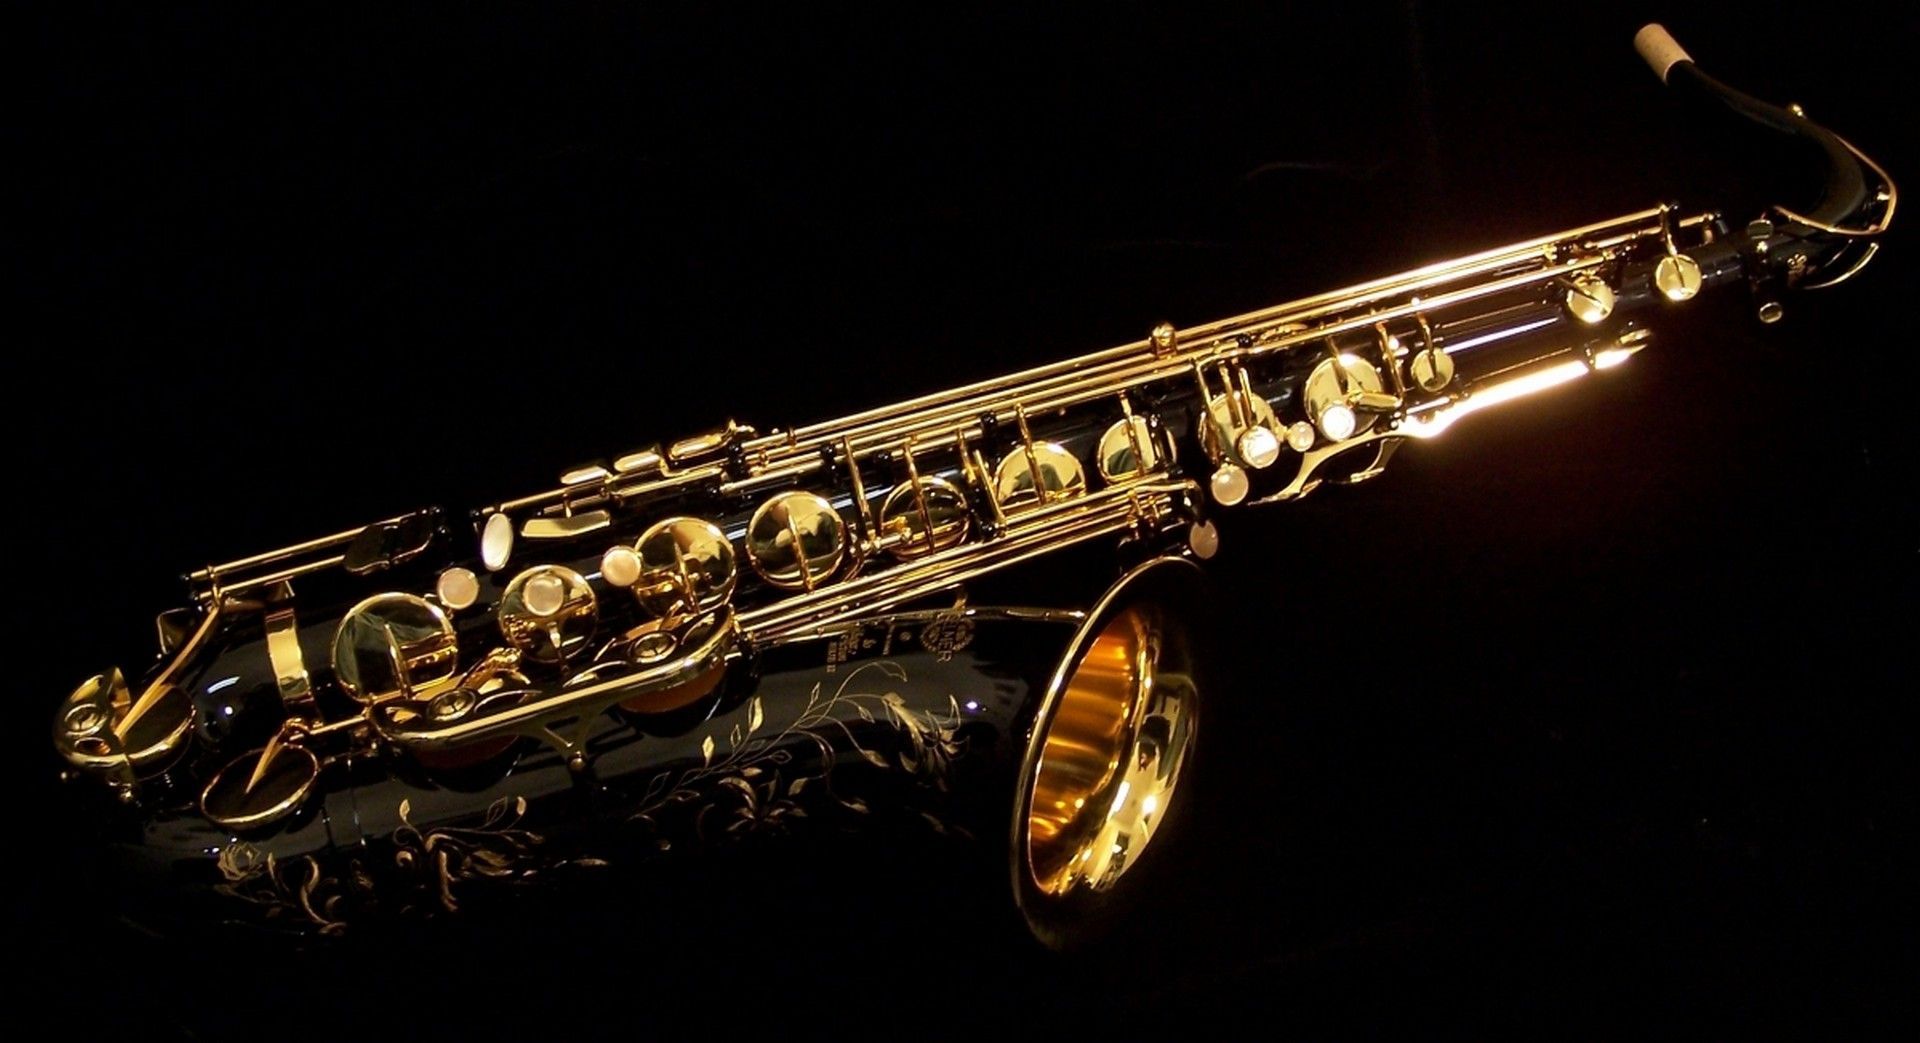 Fondos de Saxofón # 9164D78 (1920x1043) | WallpapersExpert.com